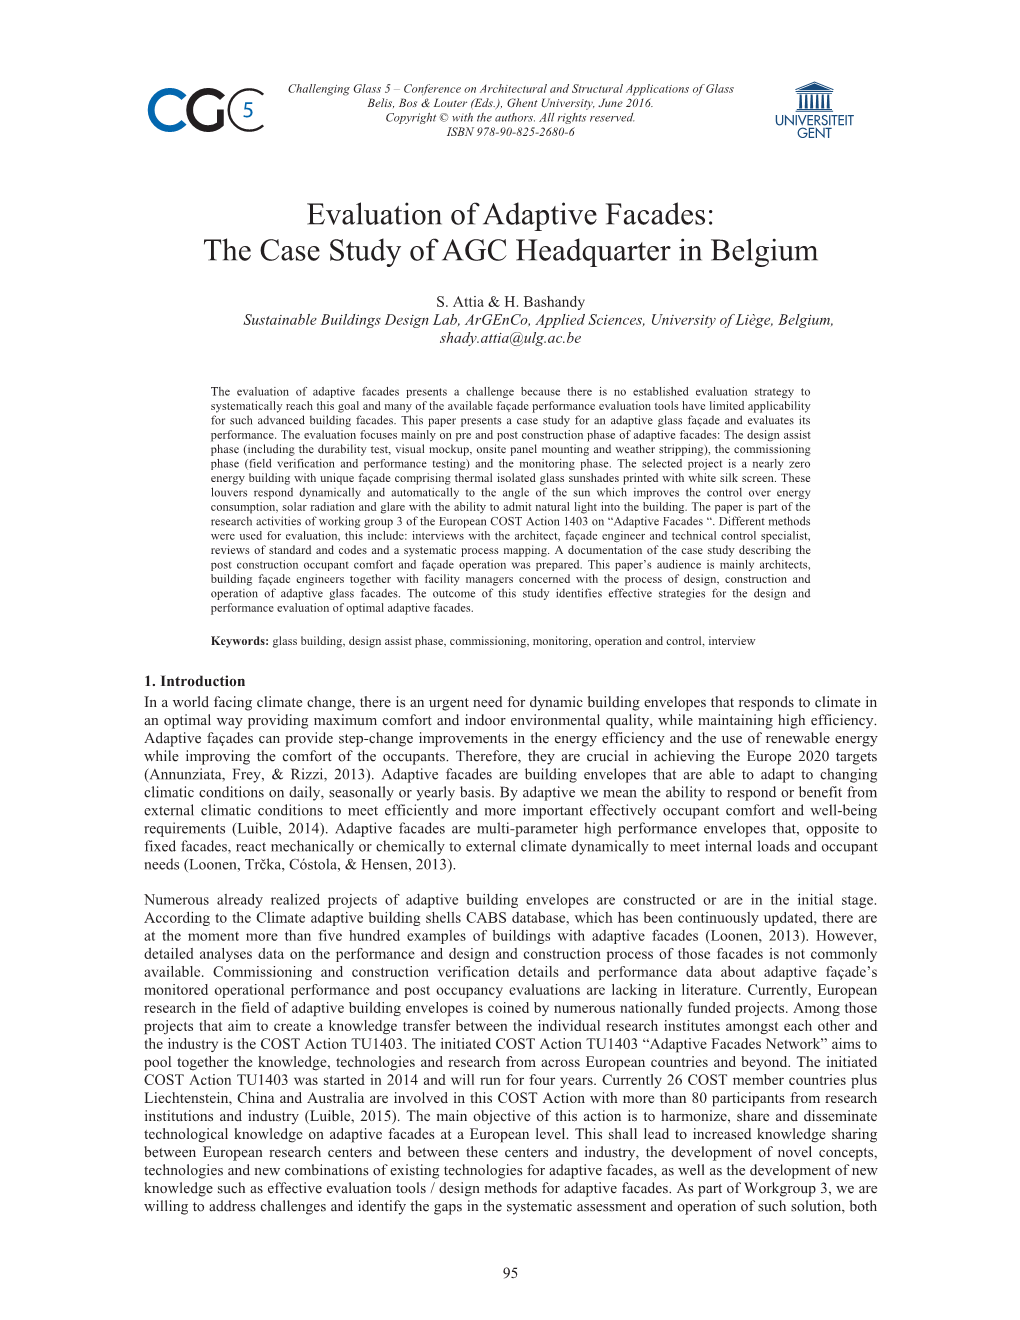 Evaluation of Adaptive Facades: the Case Study of AGC Headquarter in Belgium